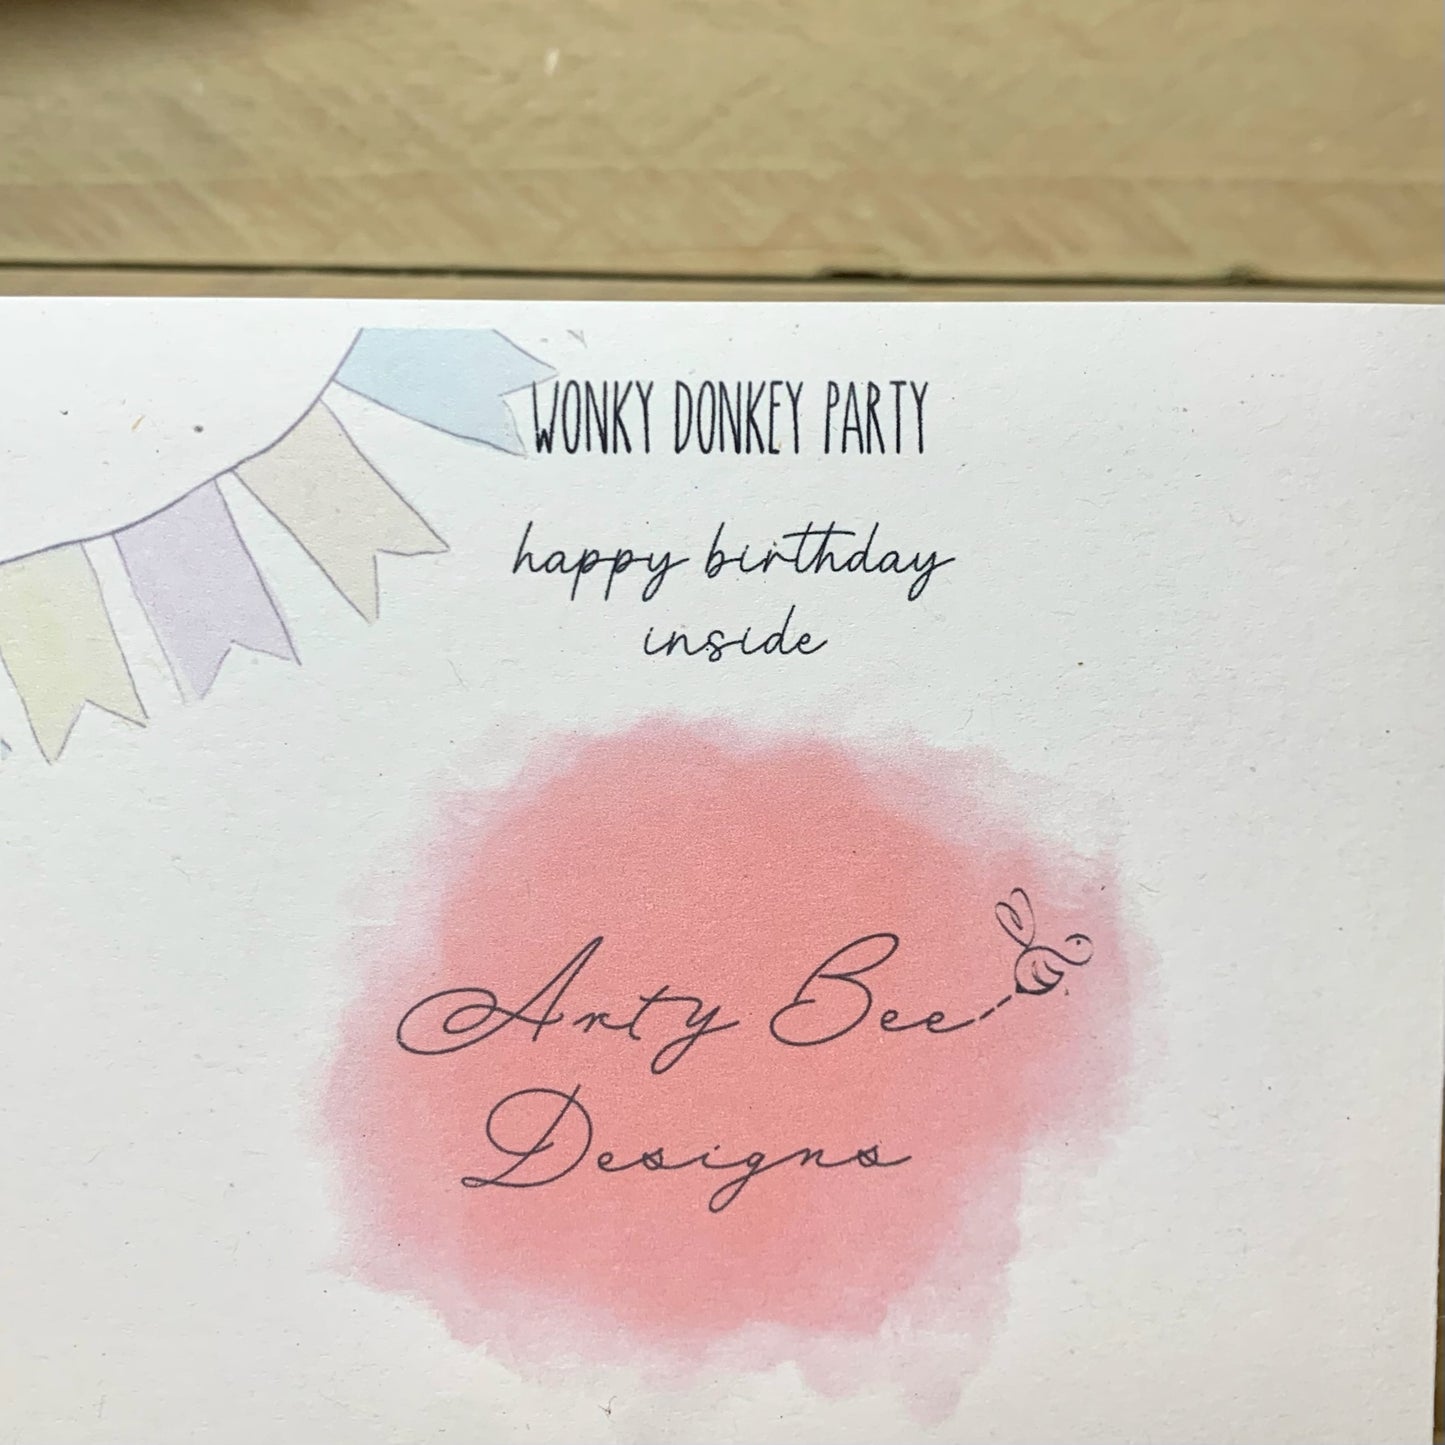 Party Horse Birthday Card